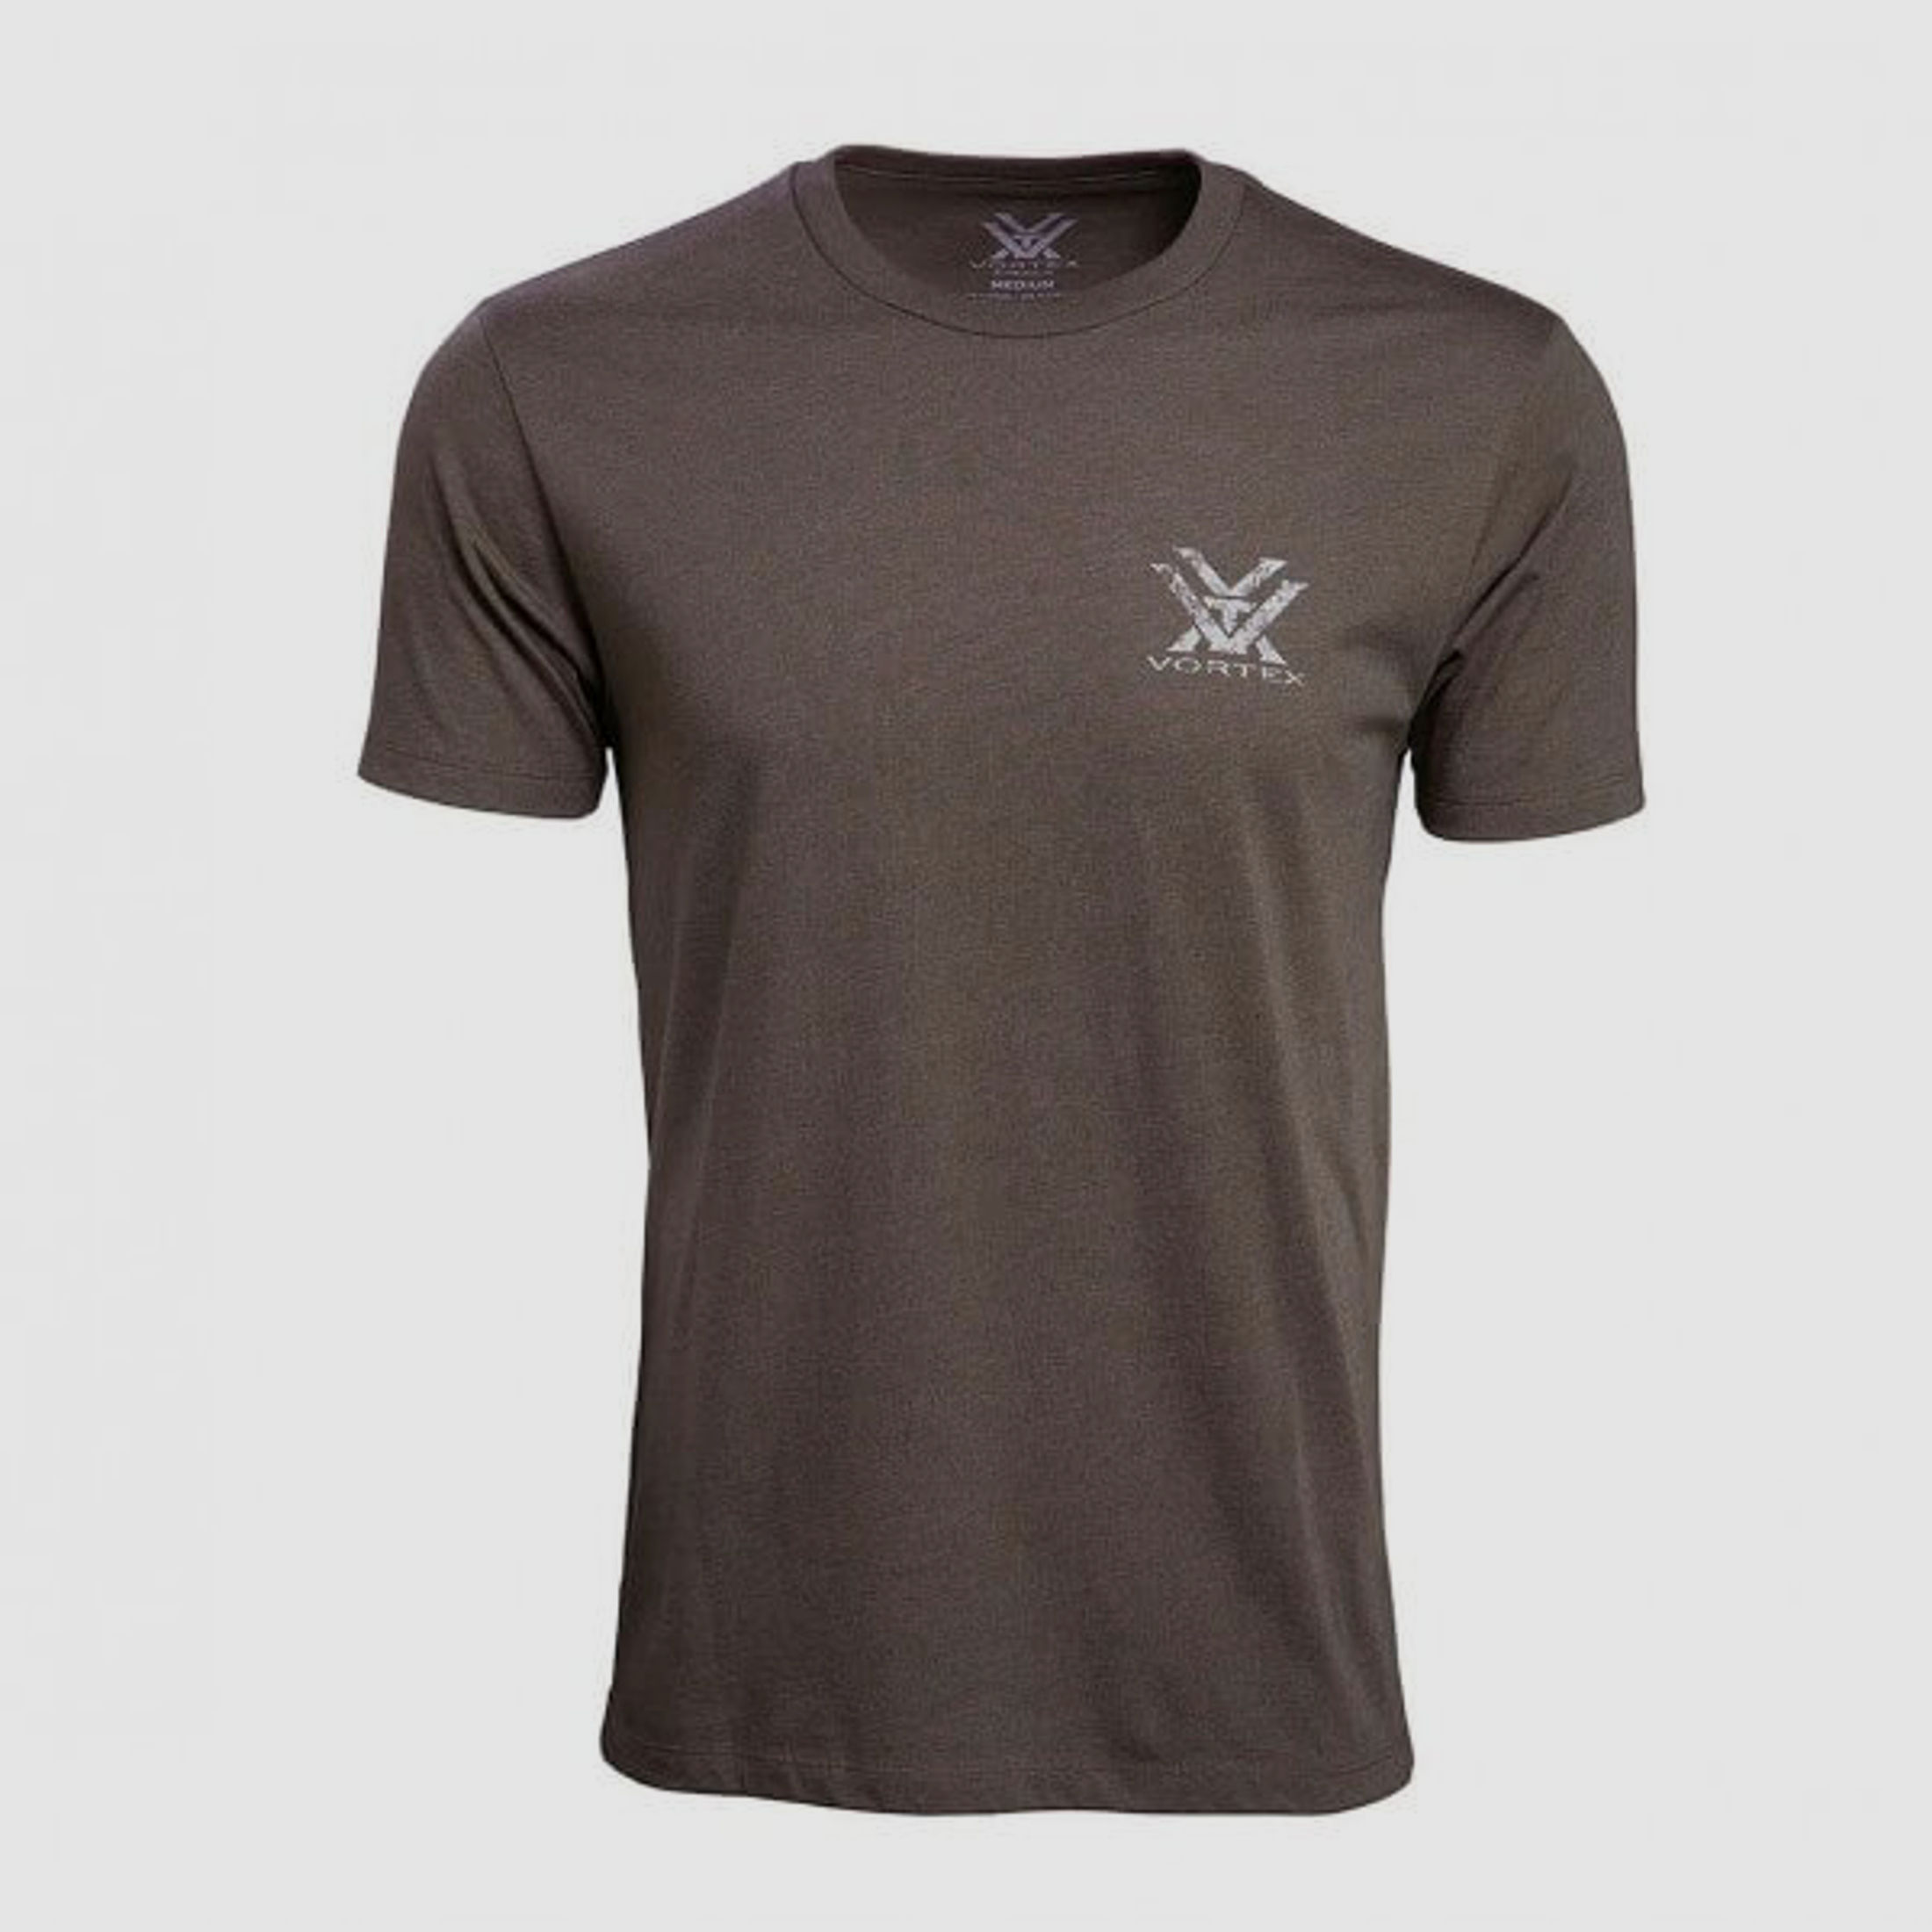 Vortex Head-on Muley Shirt brown XL